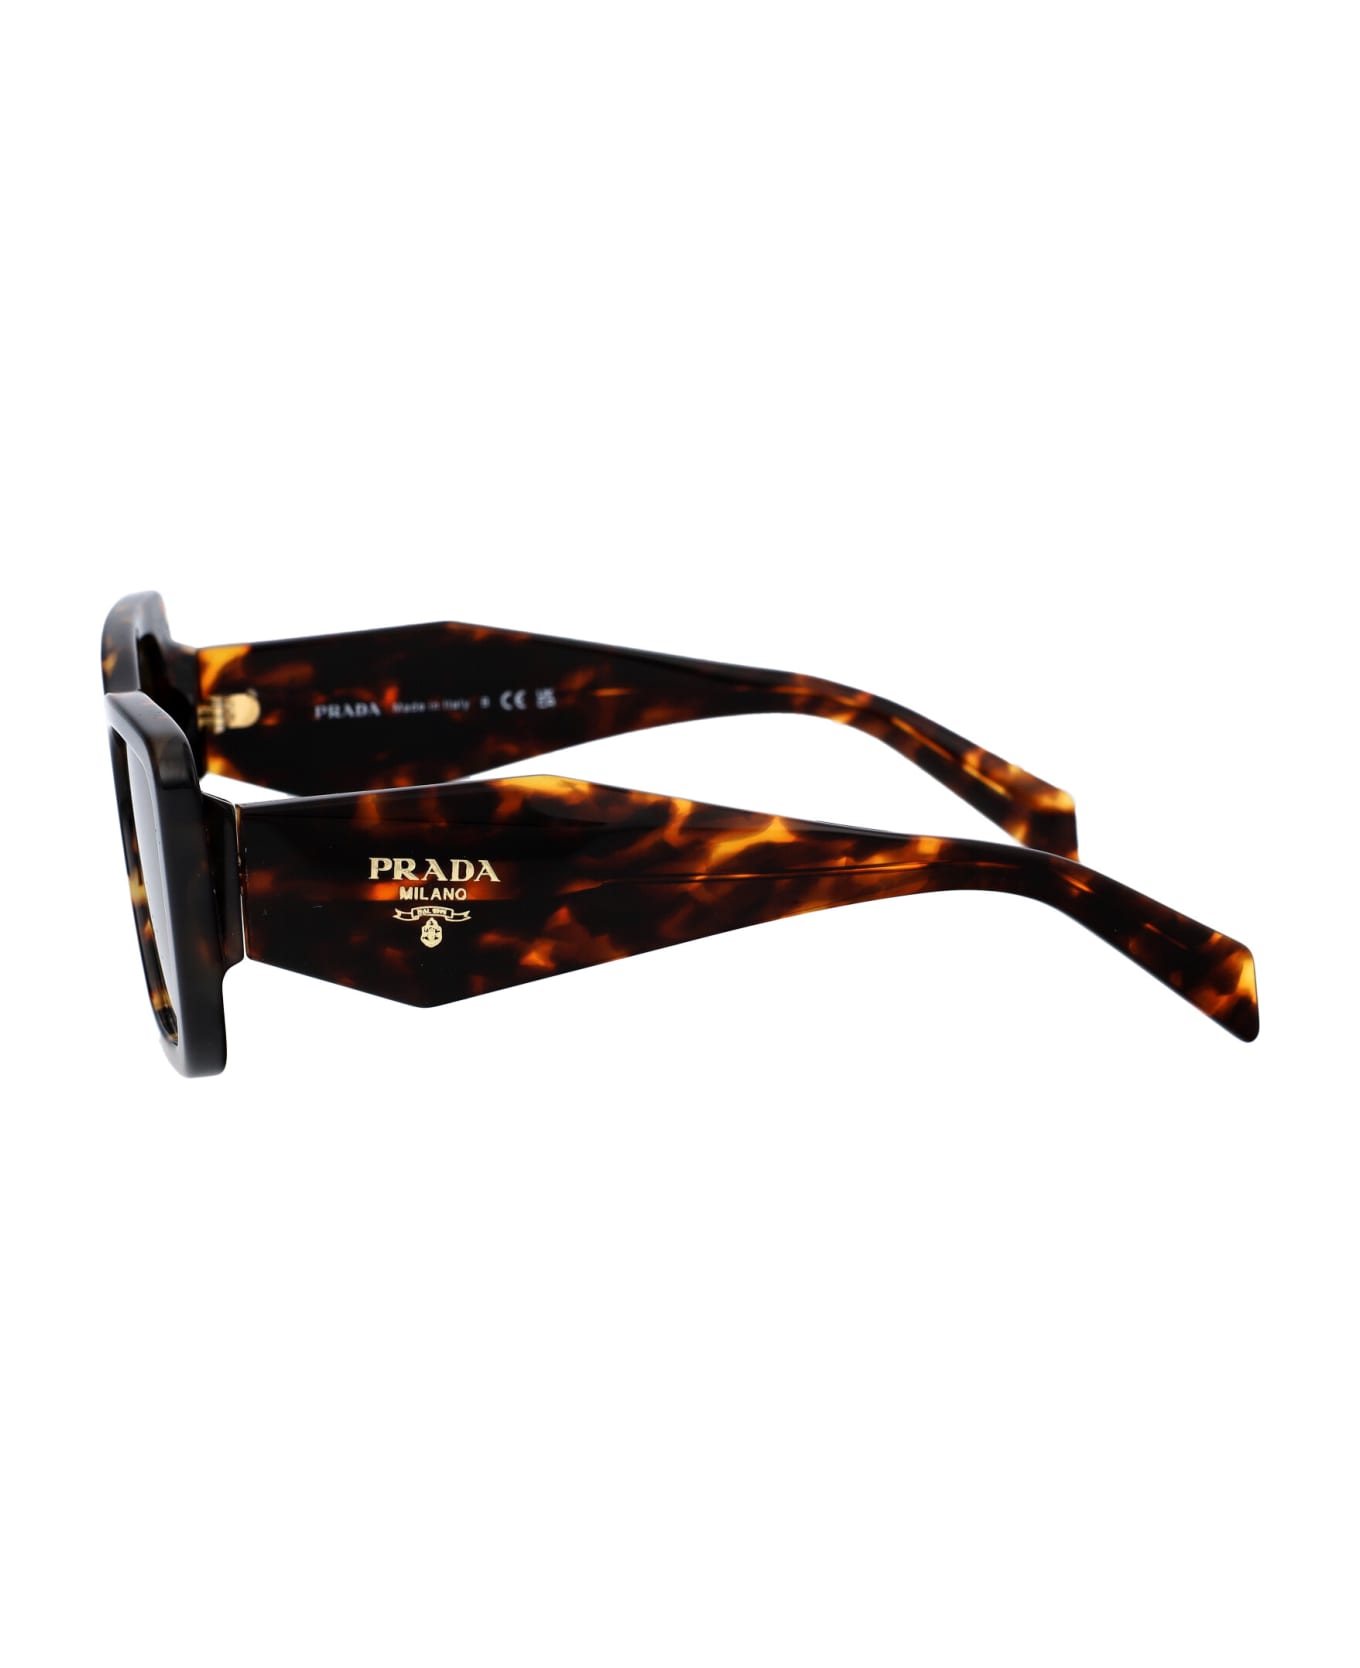 Prada Eyewear 0pr 08ys Sunglasses - VAU01T Honey Tortoise